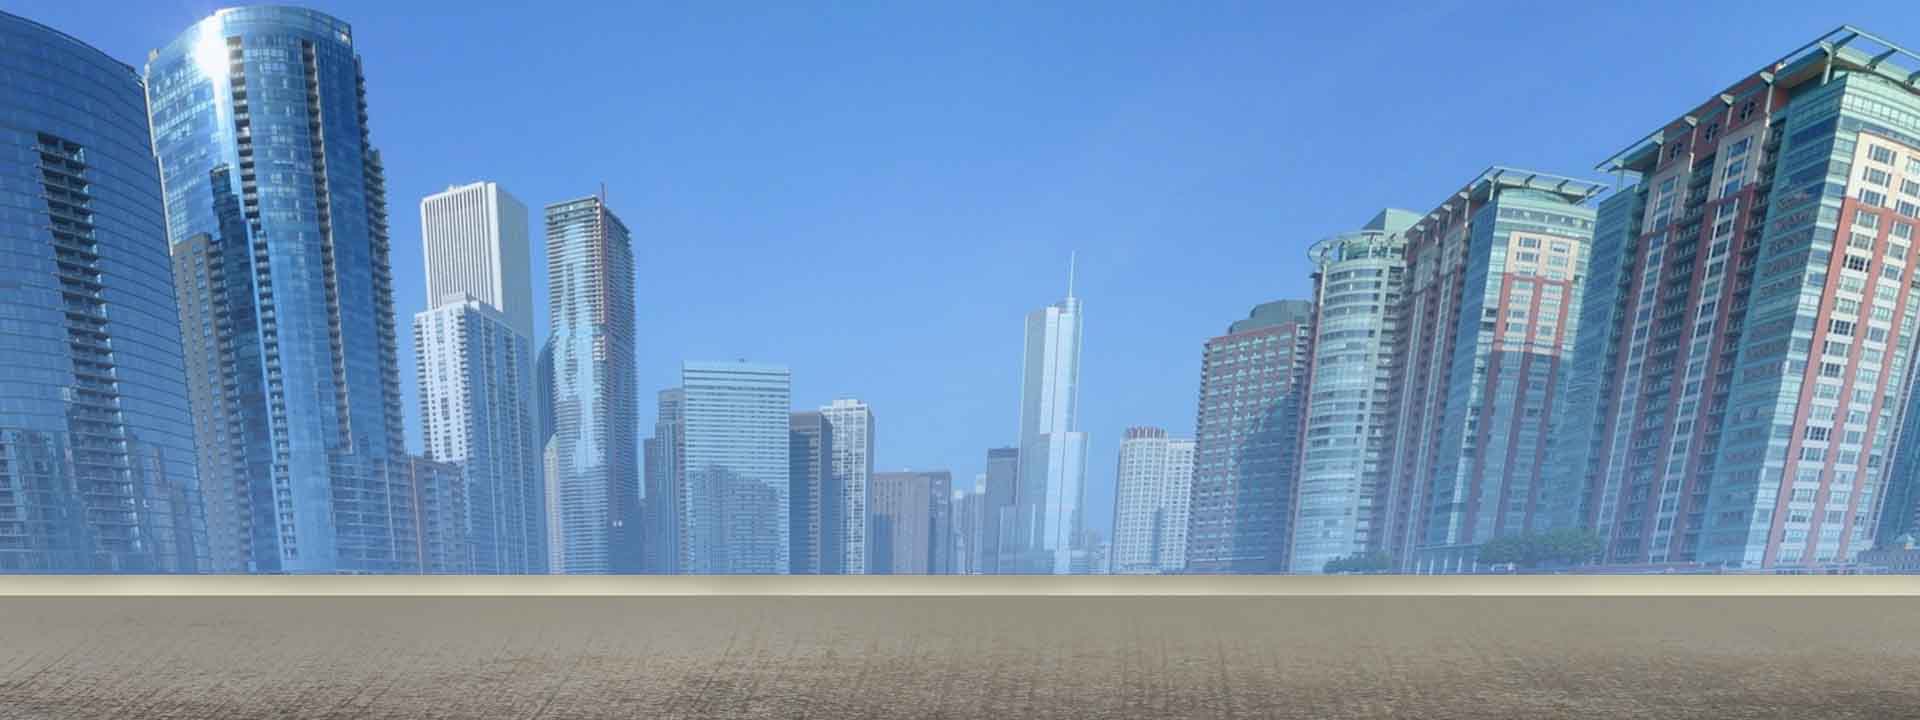 City Skyline Background Actia Corporation Usa